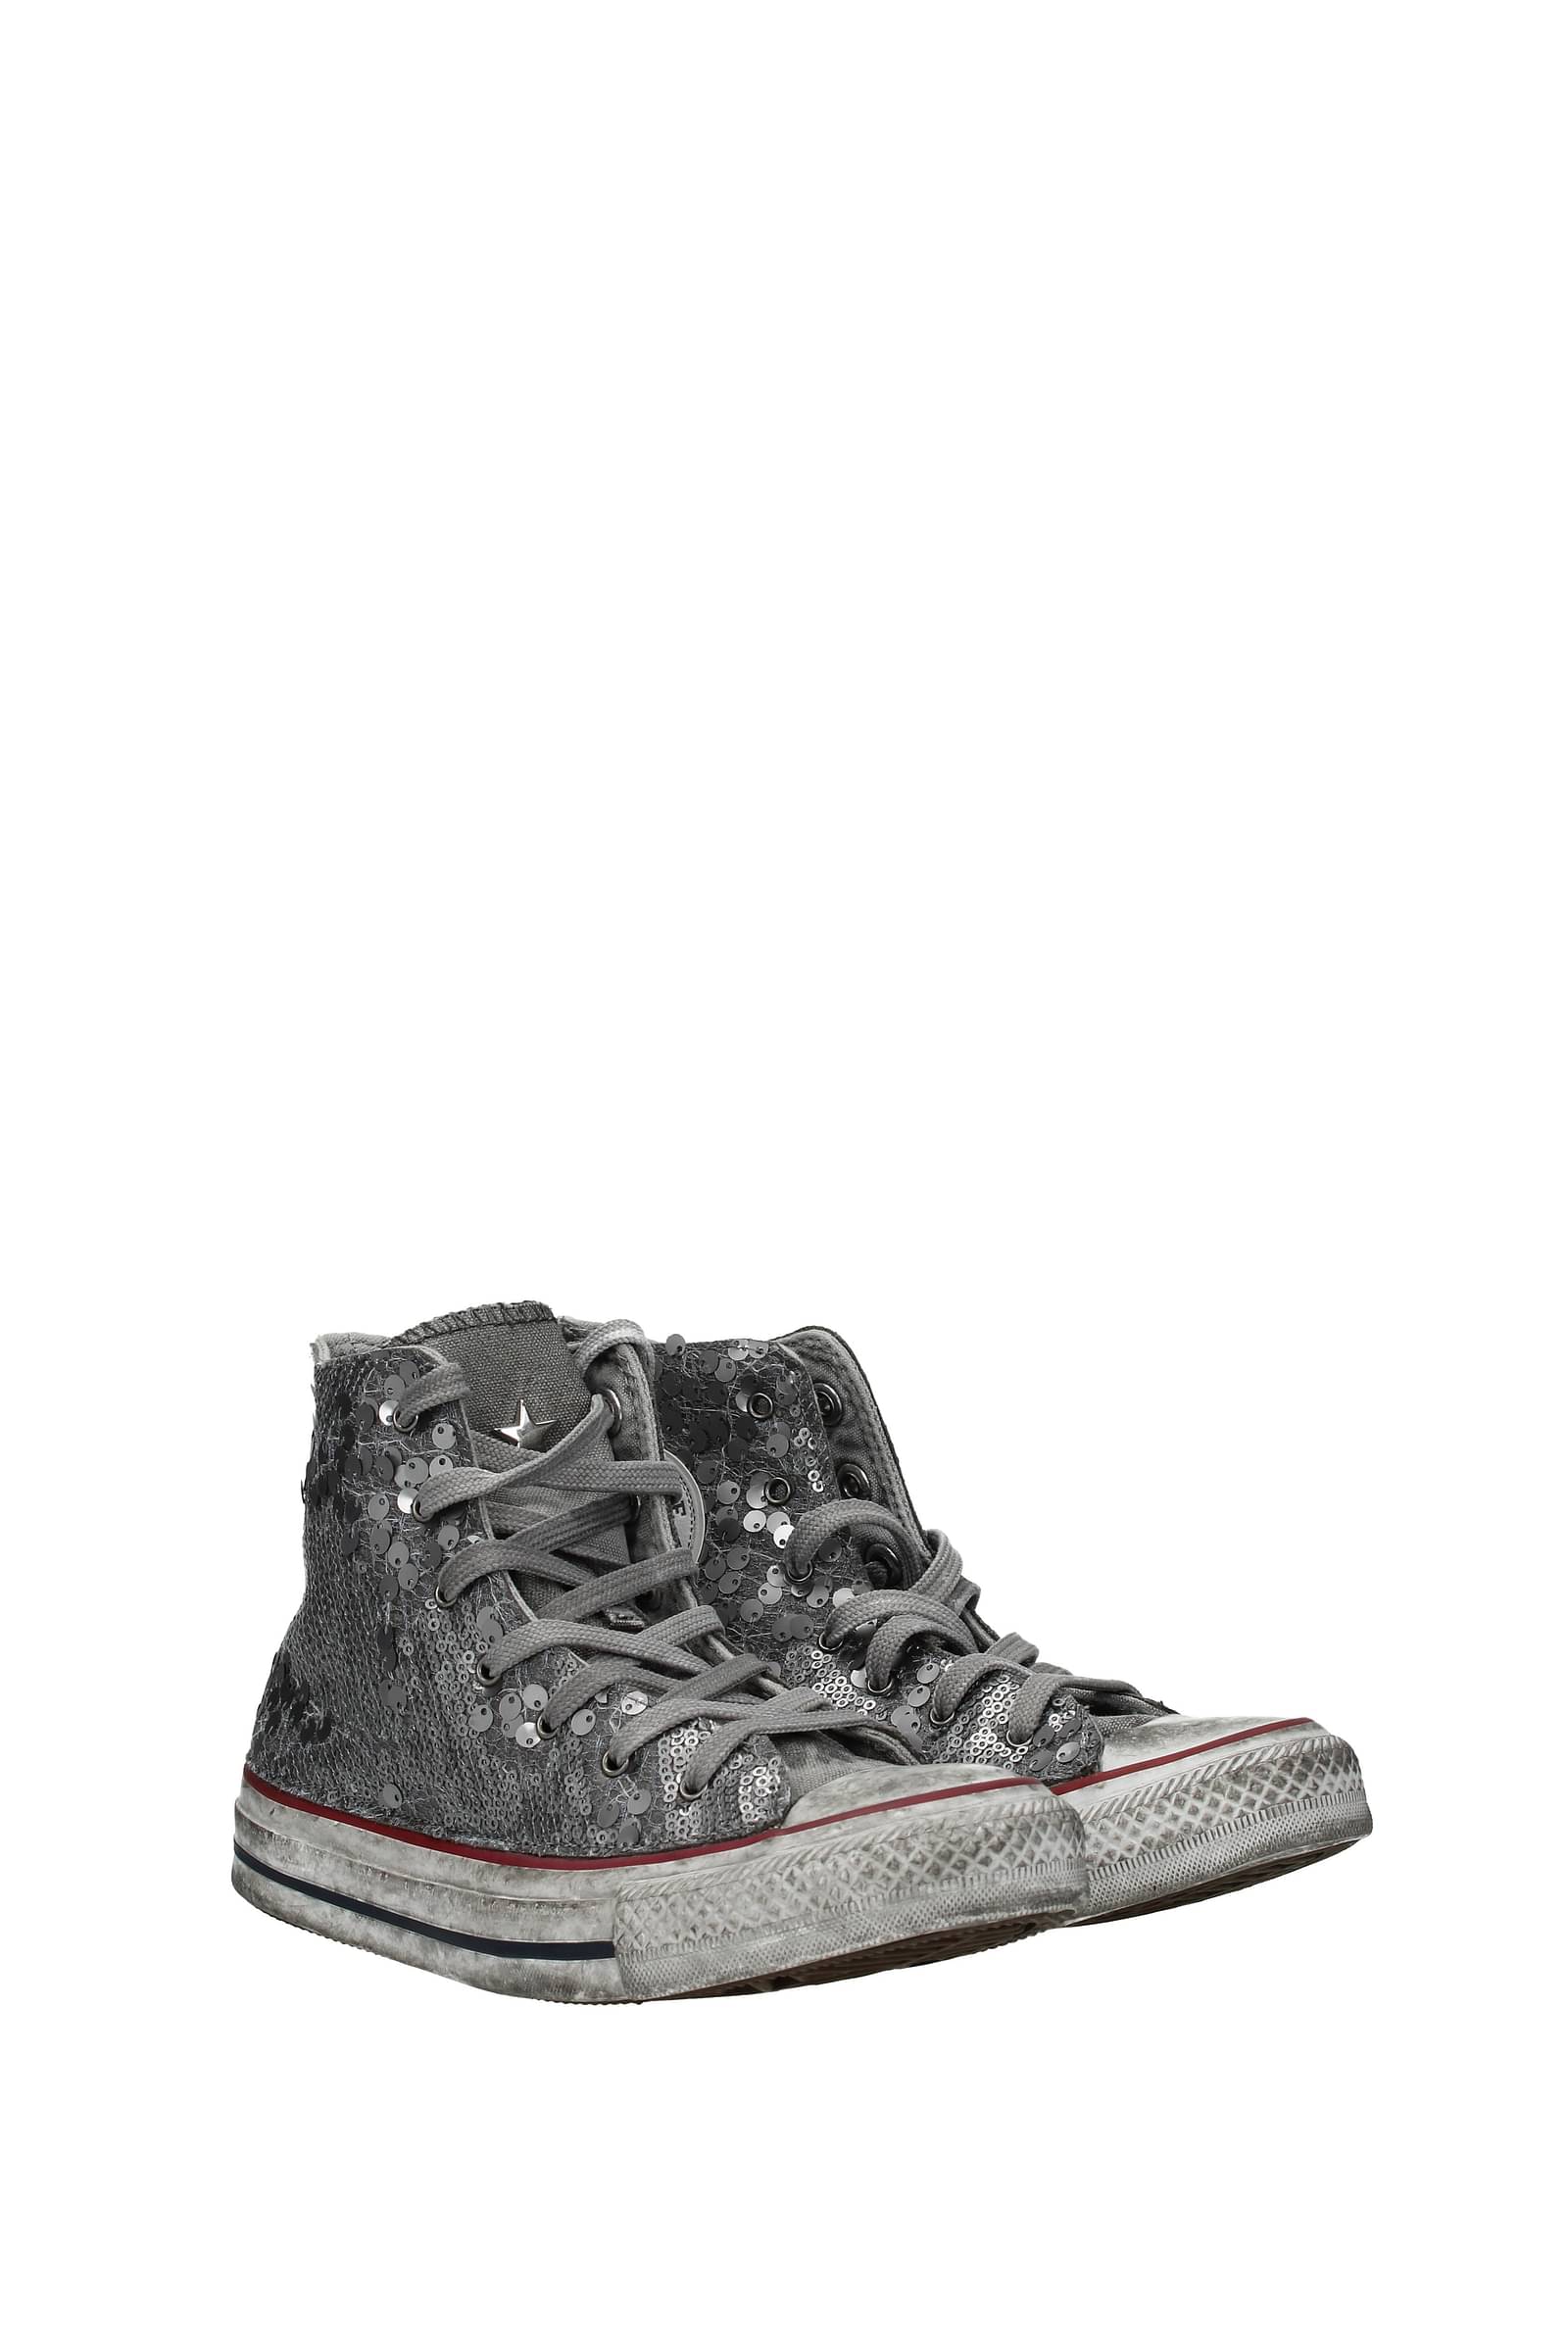 Converse Sneakers Donna DPAILLETTES1C16FA19 Paillettes 61,6€ سمنة المراعي